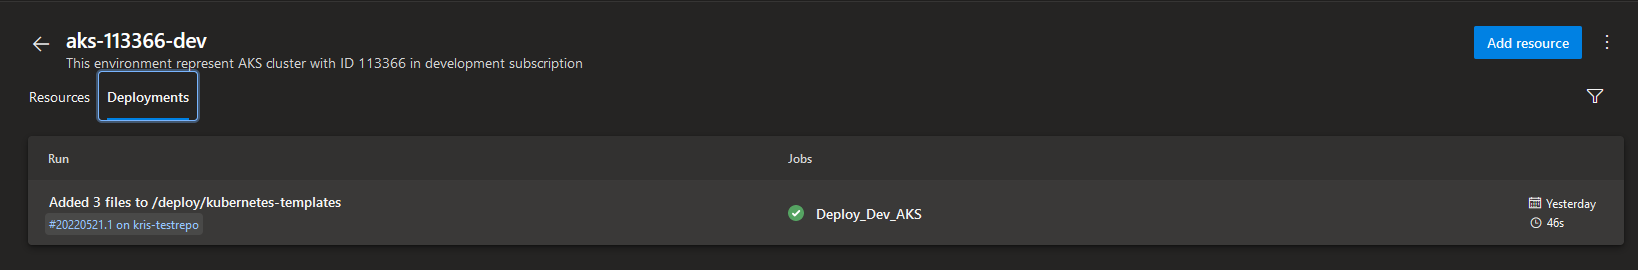 Screenshot of Azure DevOps Environment Deployments section